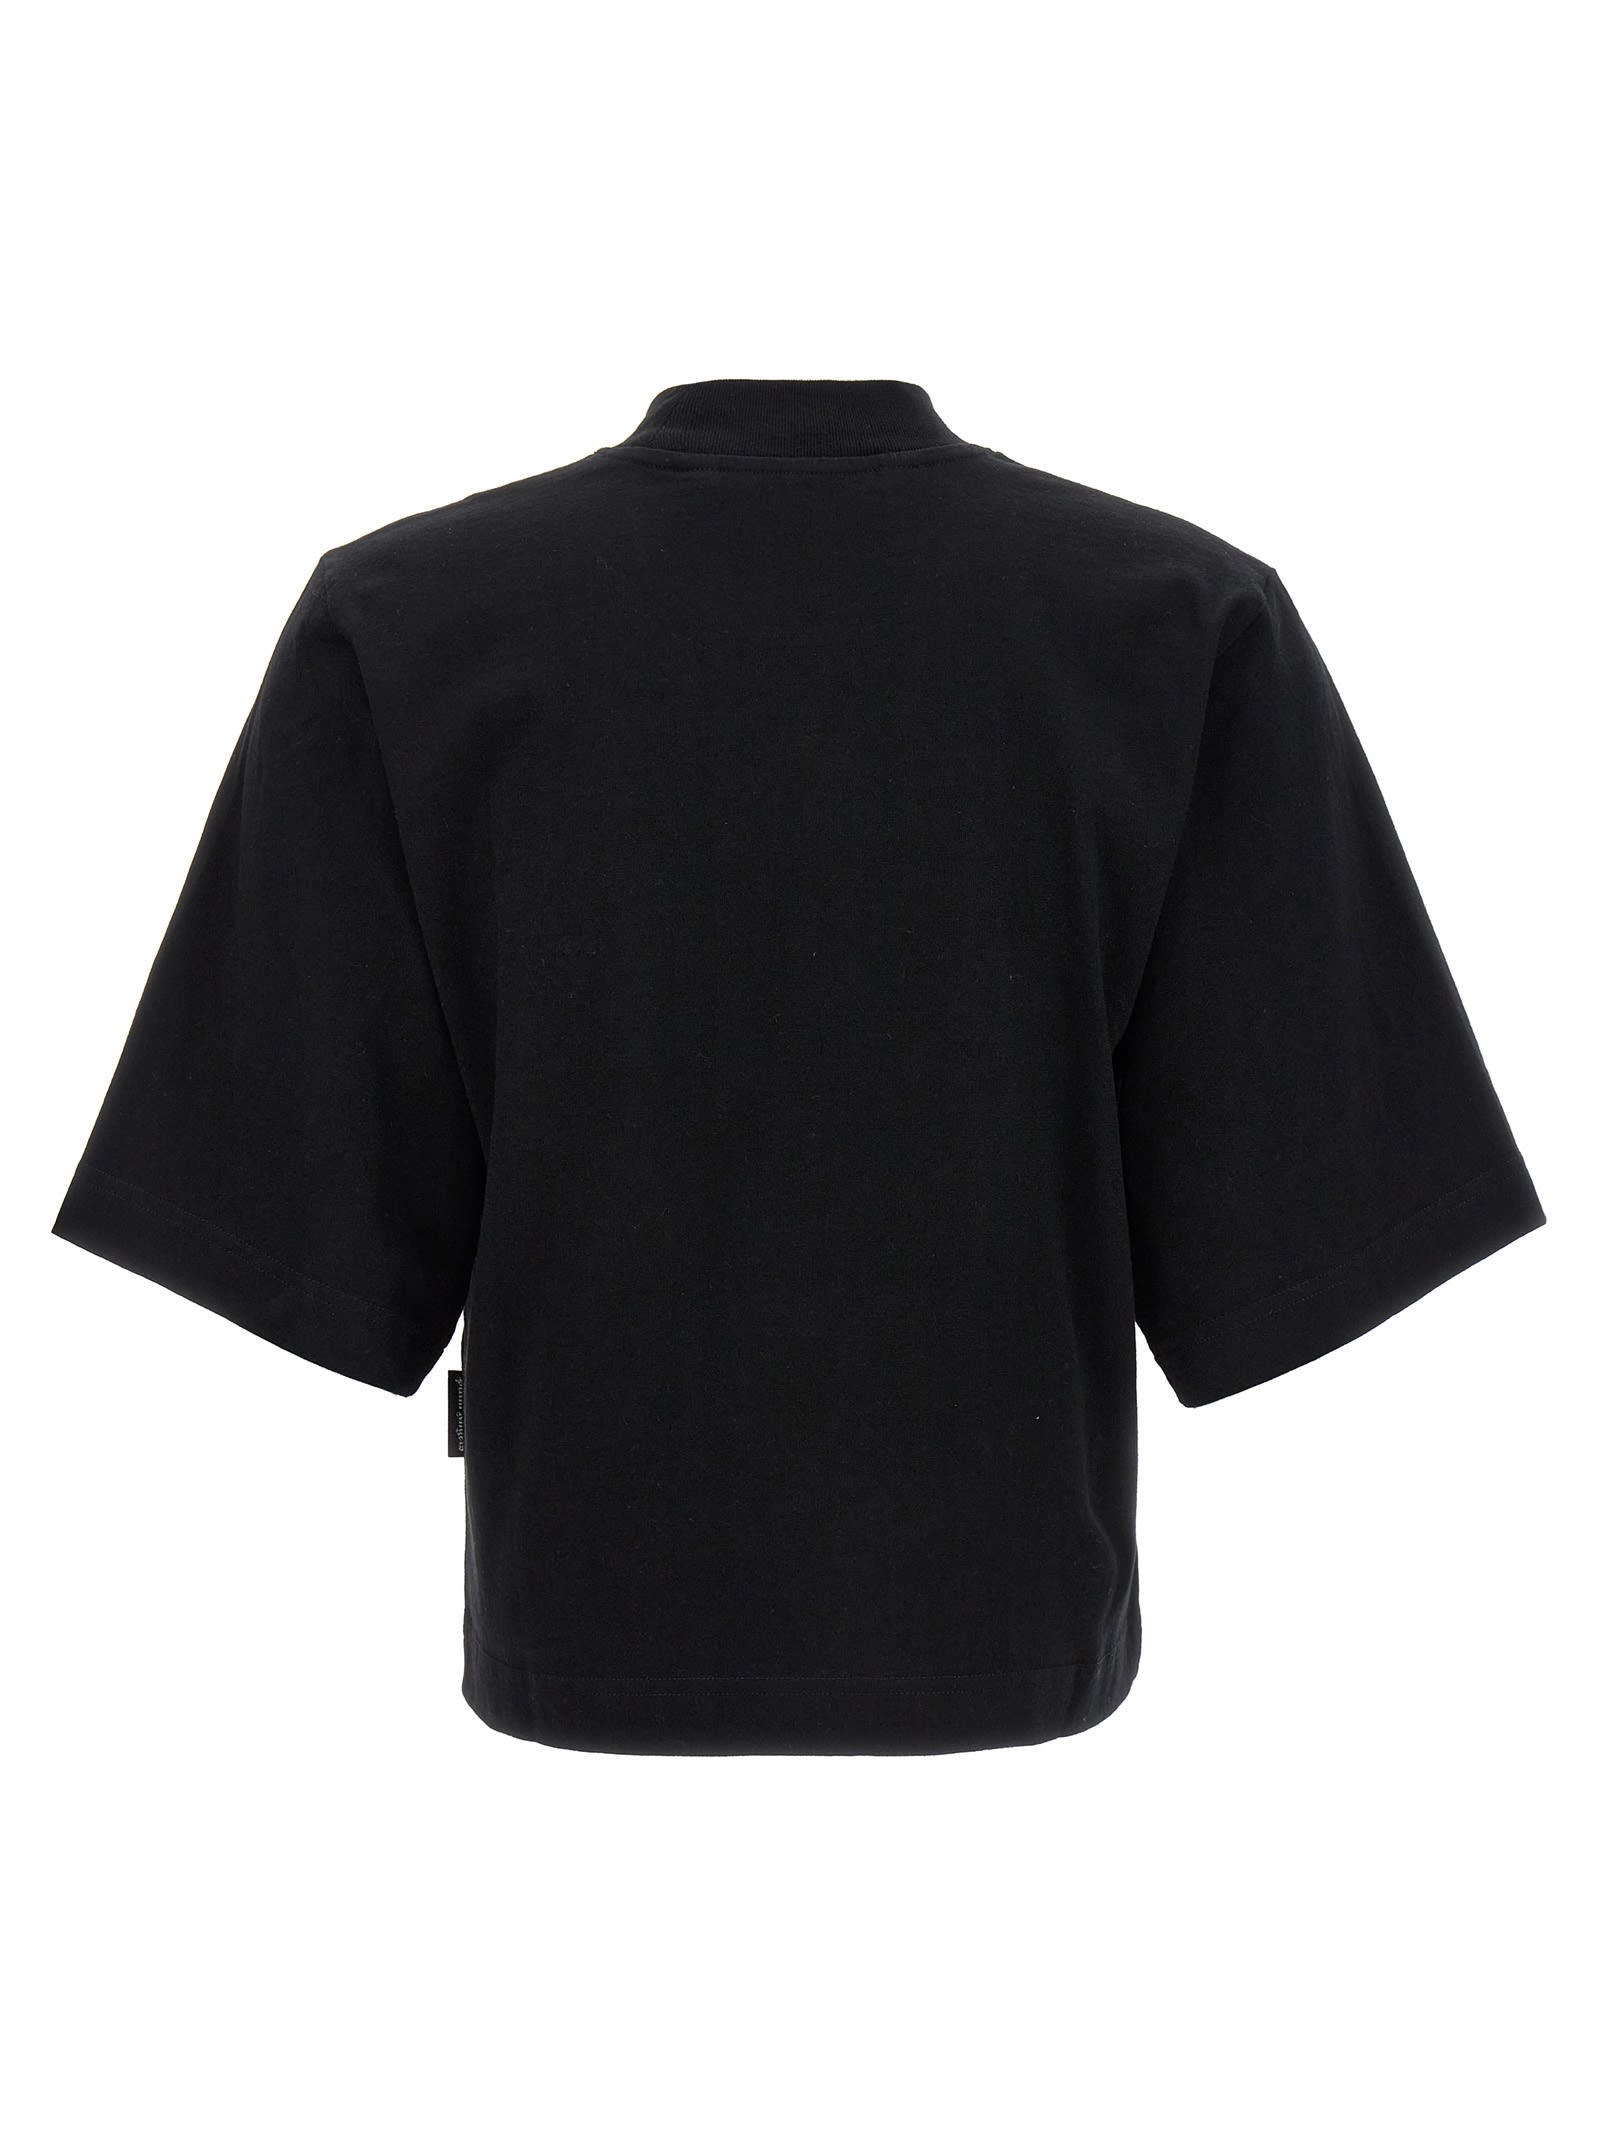 Shop Palm Angels Mirage T-shirt In Black